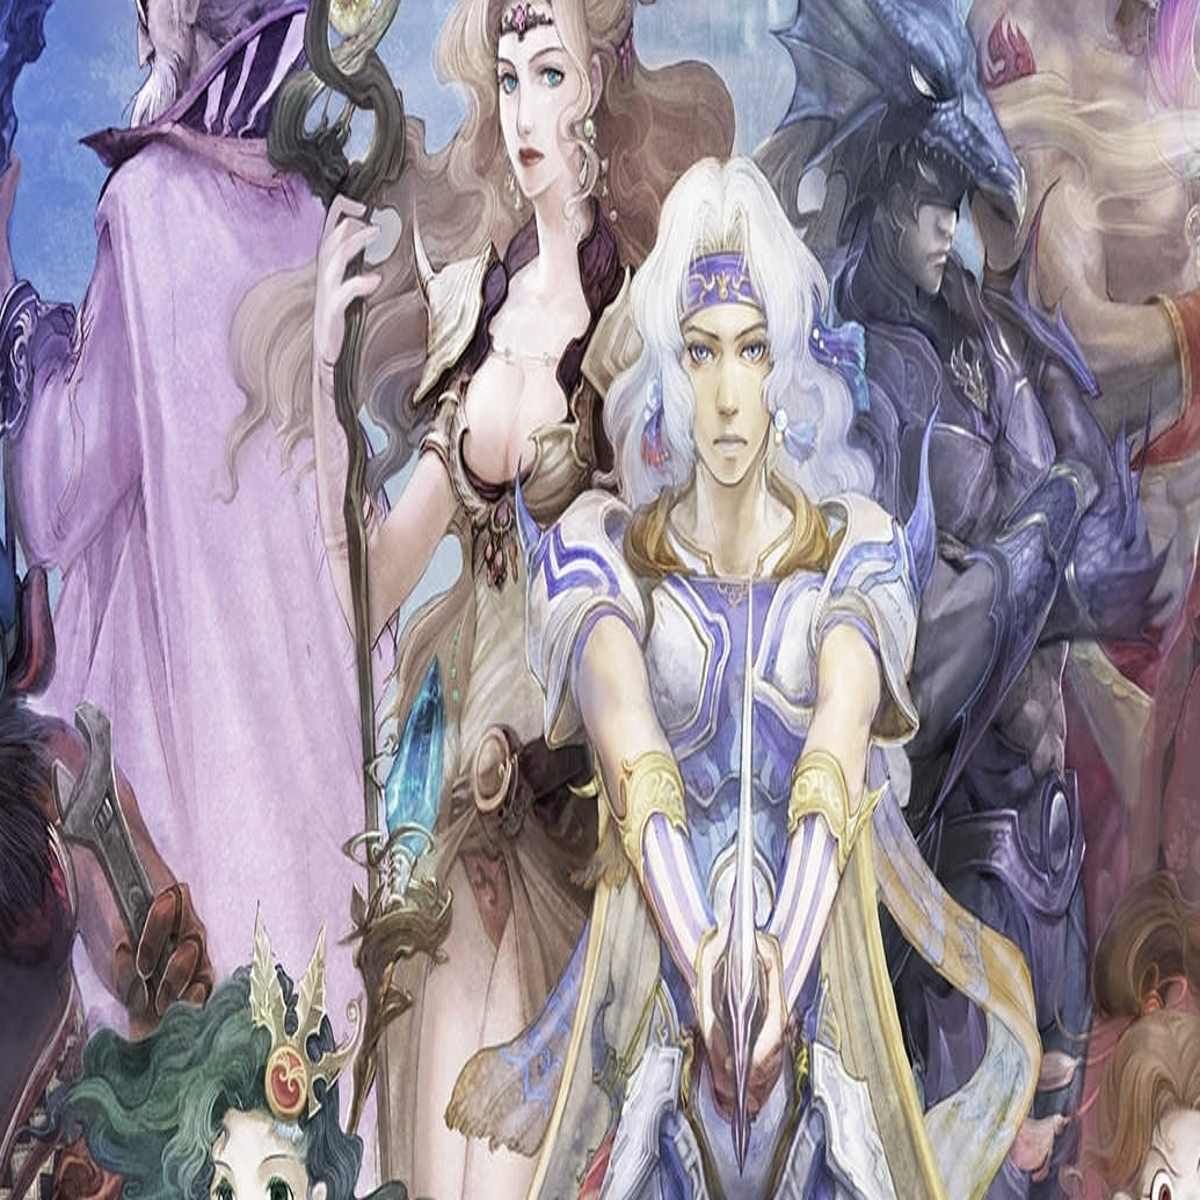 Final Fantasy's Lightning Is Perfect Avatar for Heroic Women